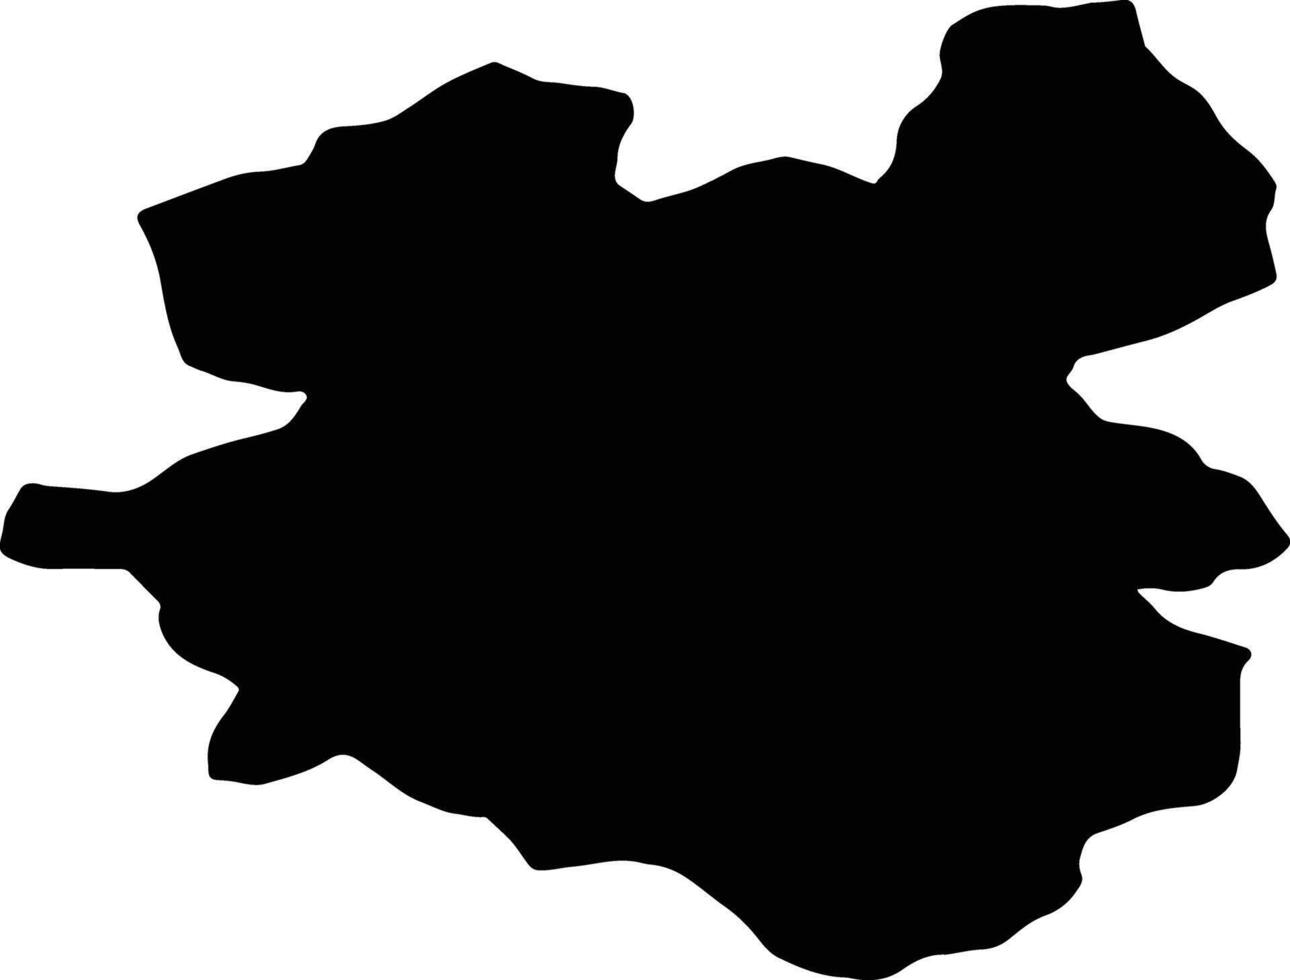 Erzurum Turkey silhouette map vector